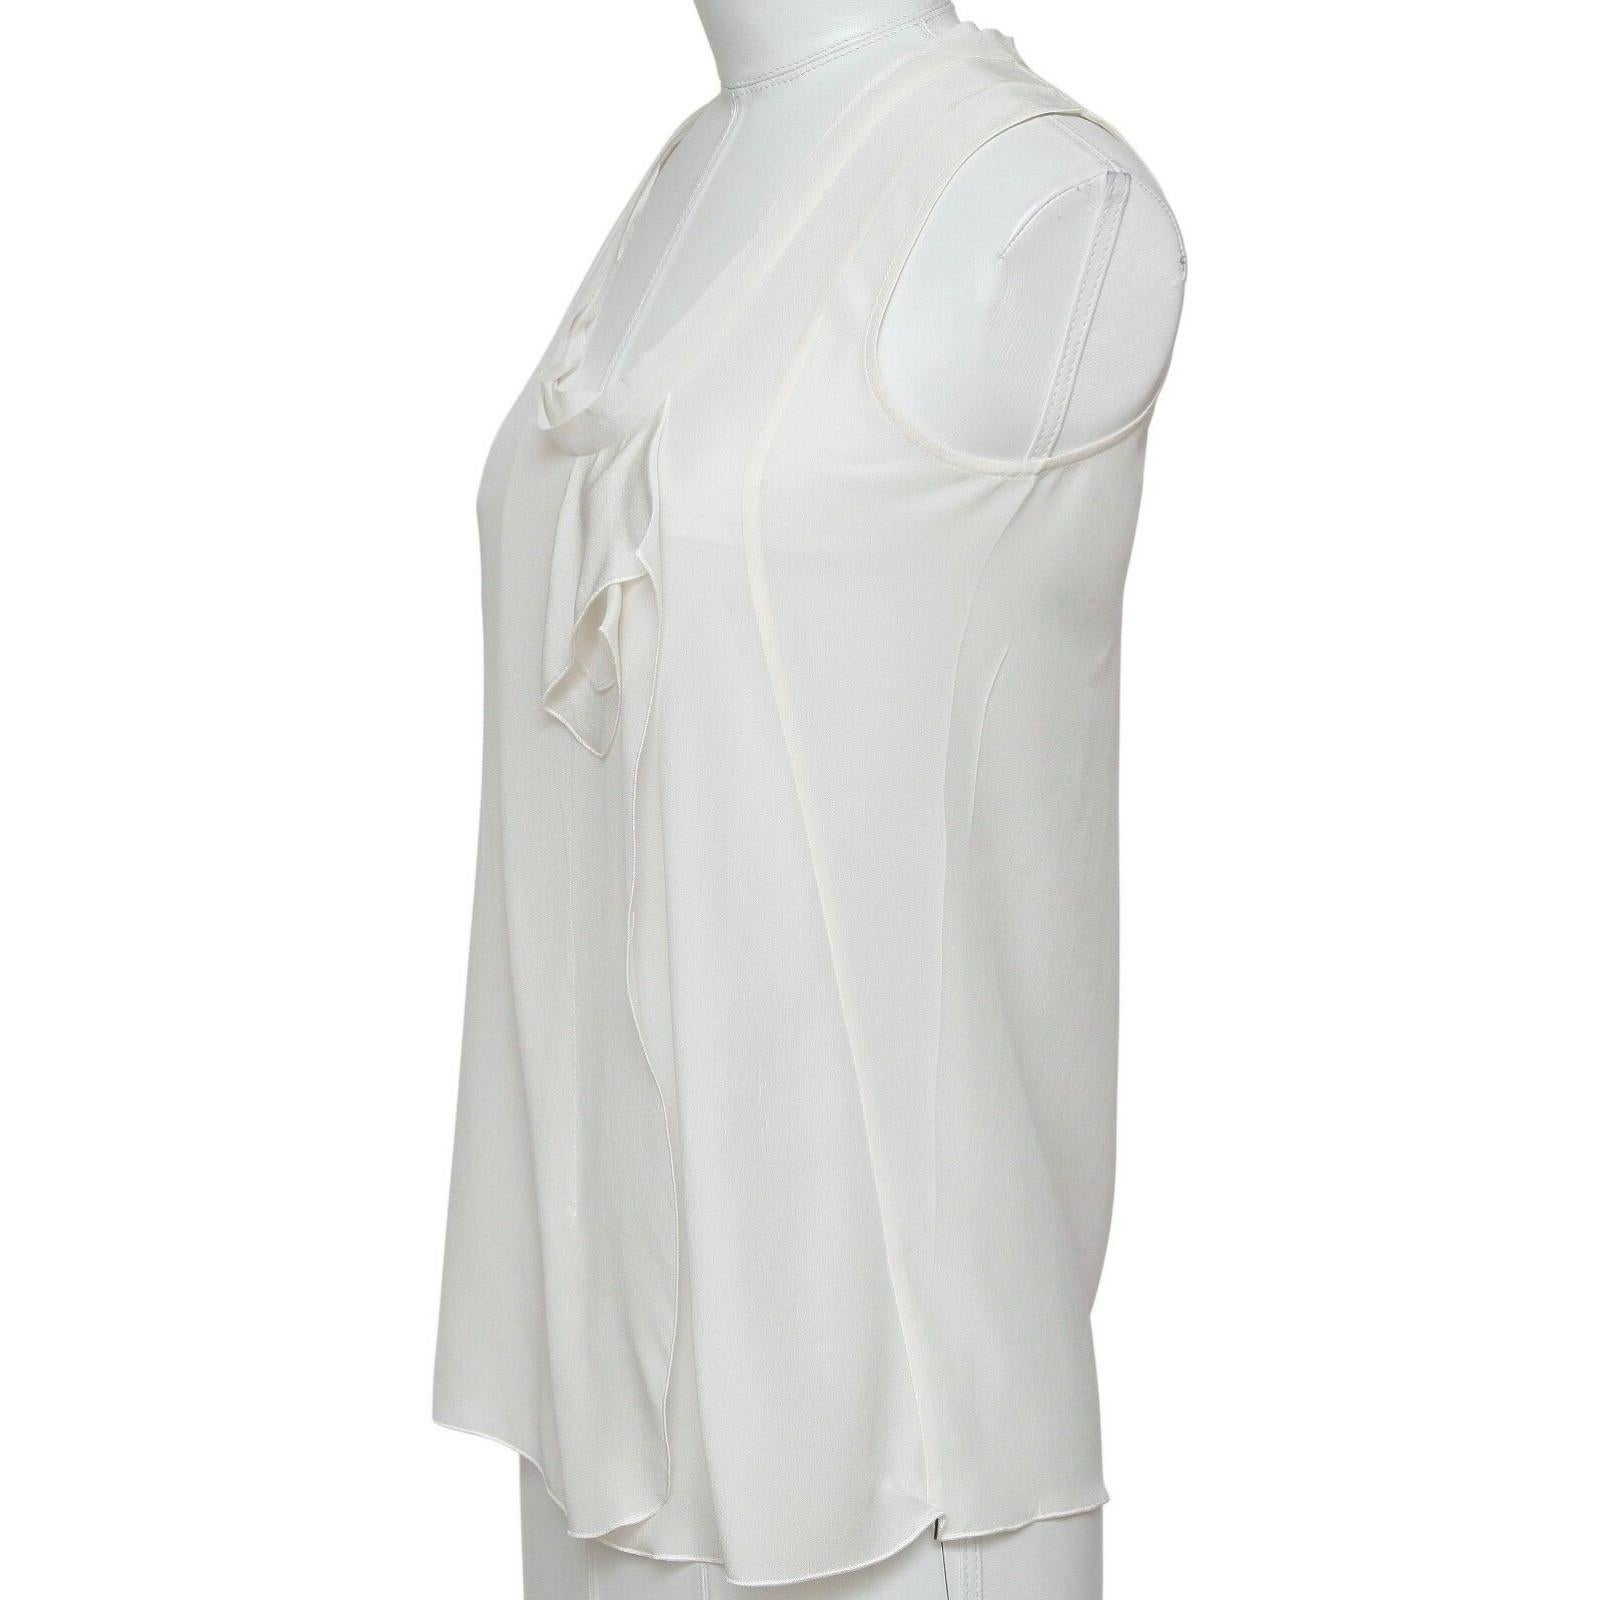 Gray MIU MIU Blouse Top Shirt Sleeveless Silk Ivory Ruffle Sz 36 BNWT For Sale